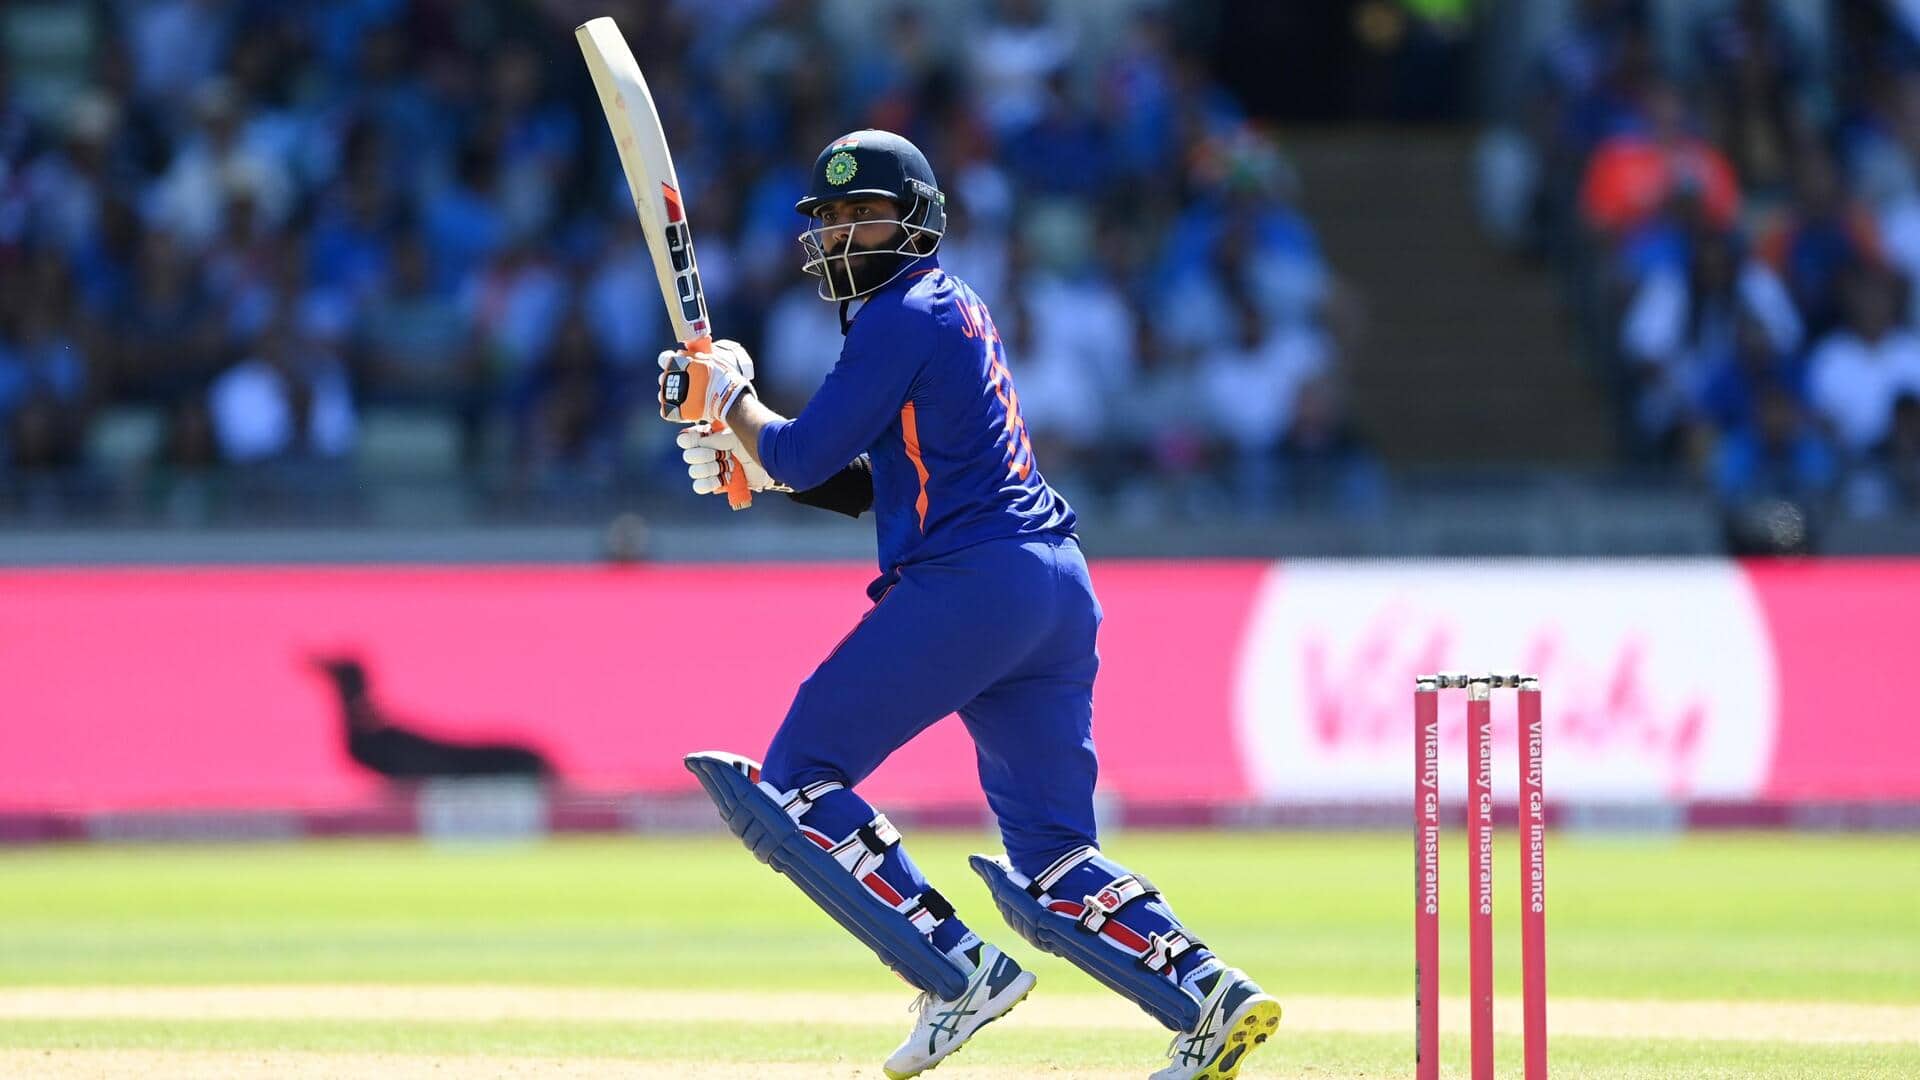 Decoding Ravindra Jadeja's recent batting struggles in ODIs